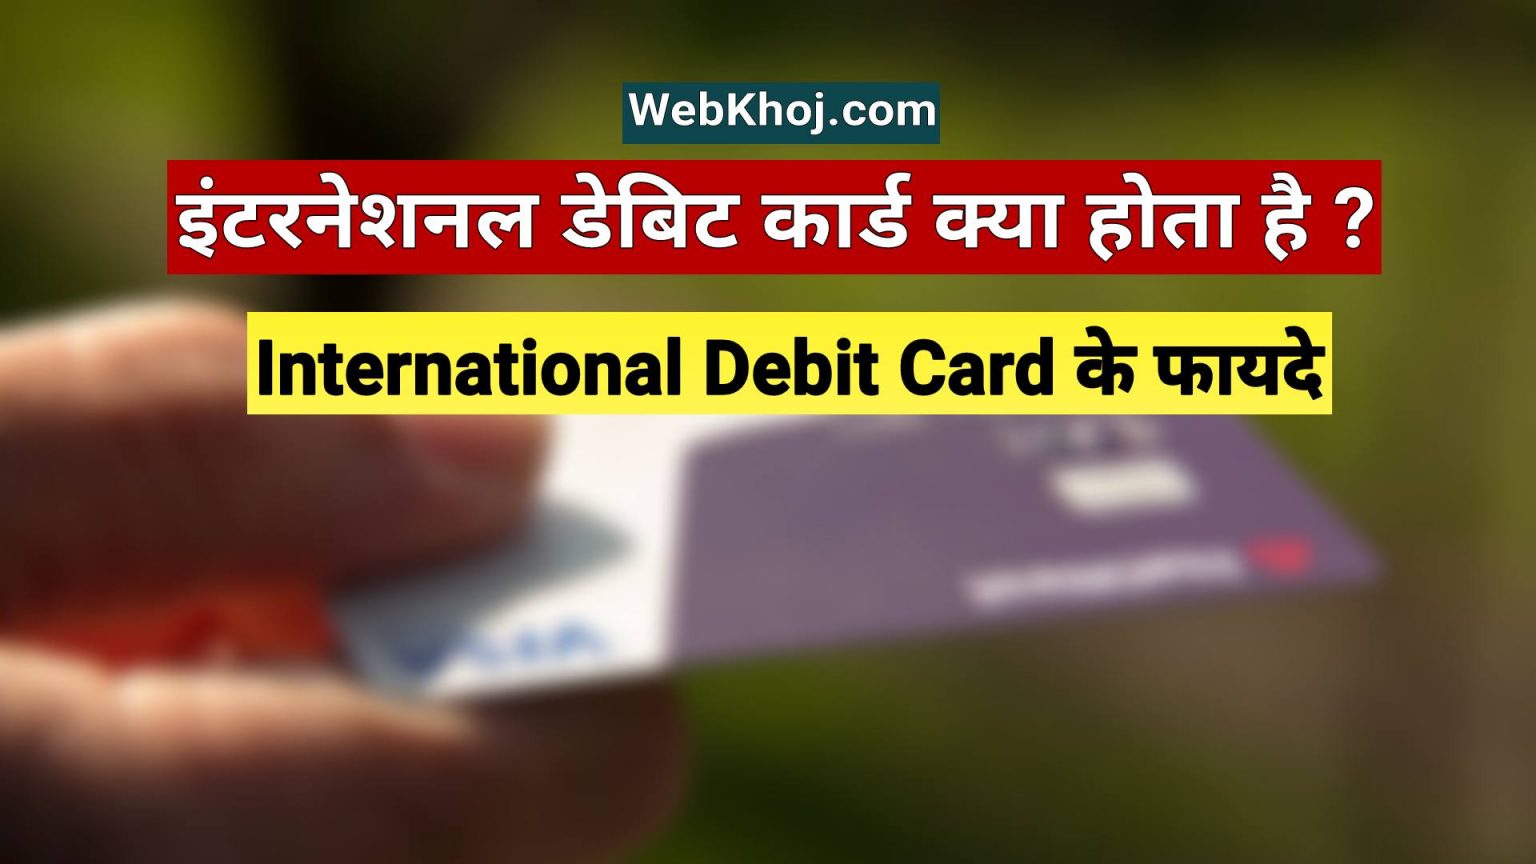 International debit card kya hota hai